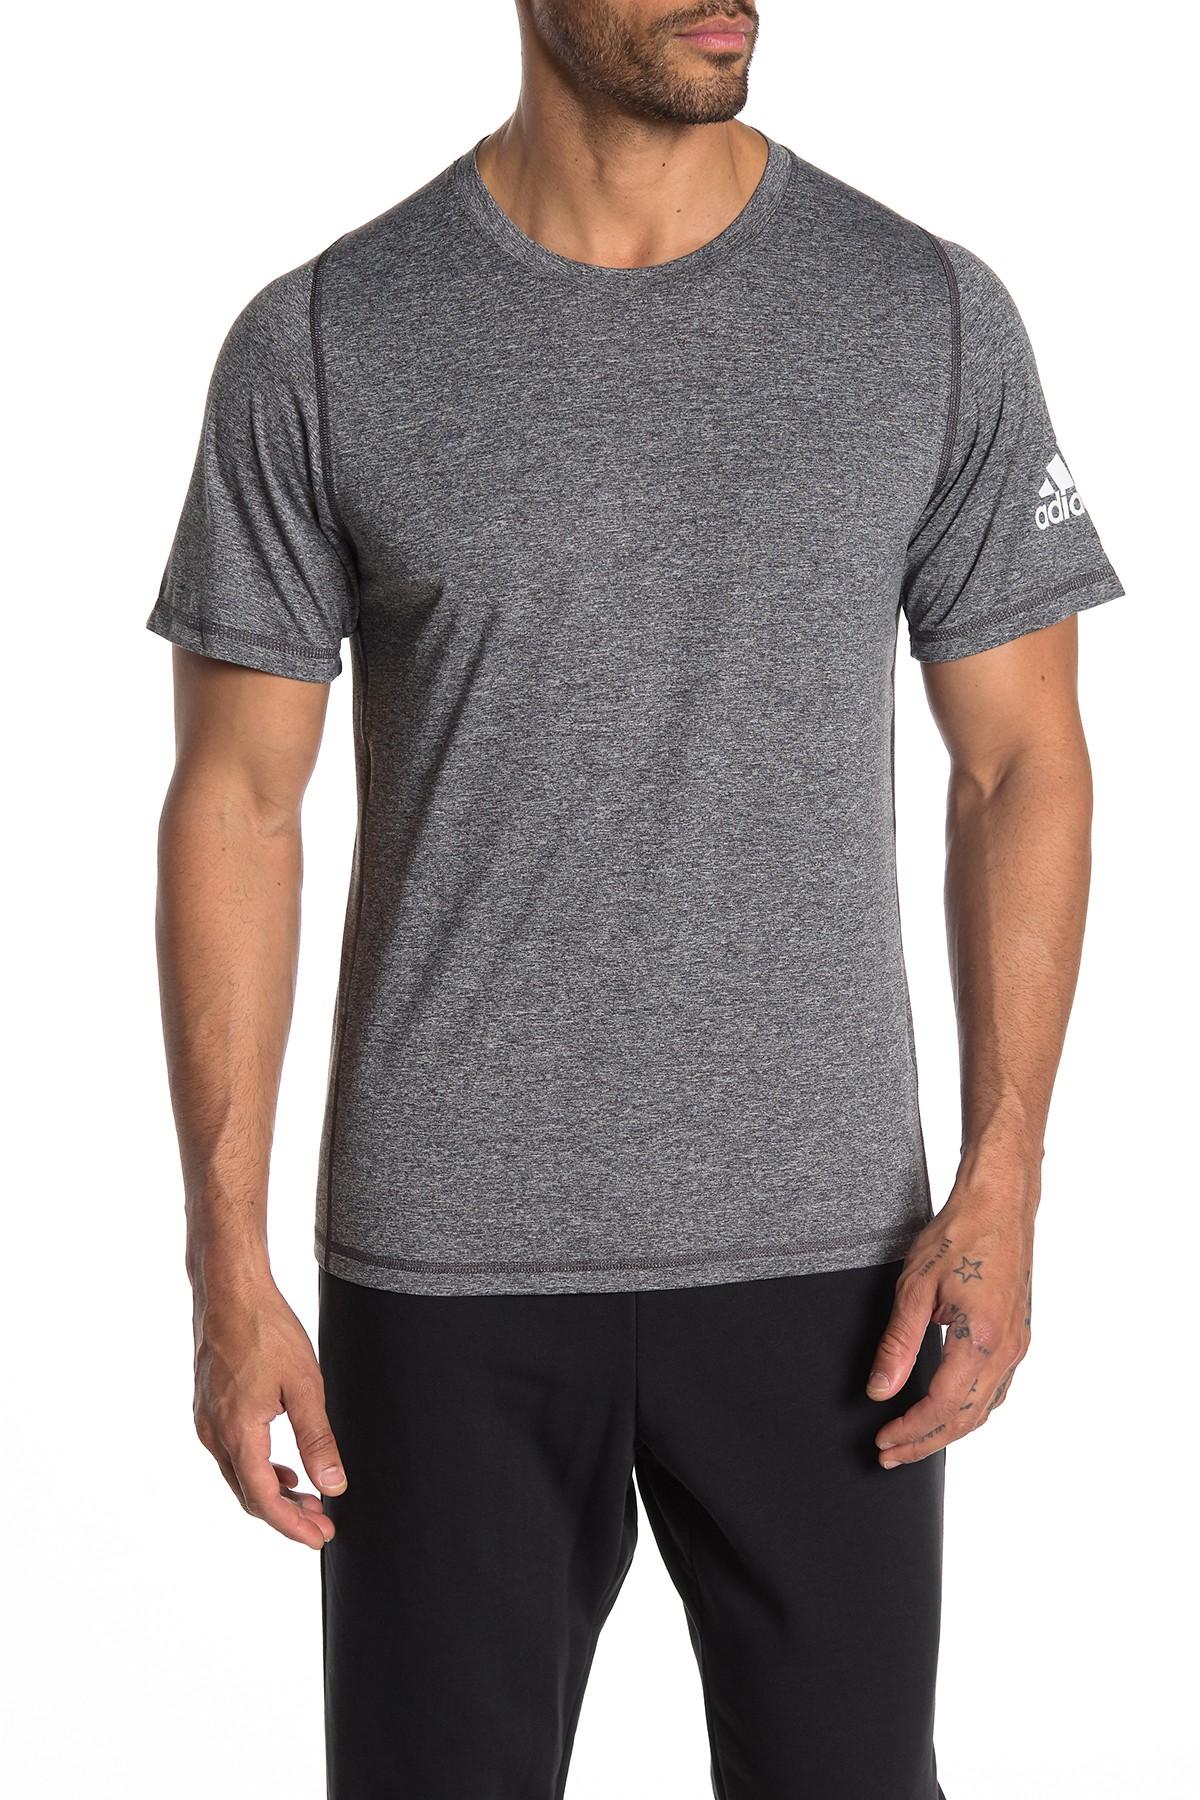 adidas Men's Gray Freelift Climalite® T-shirt